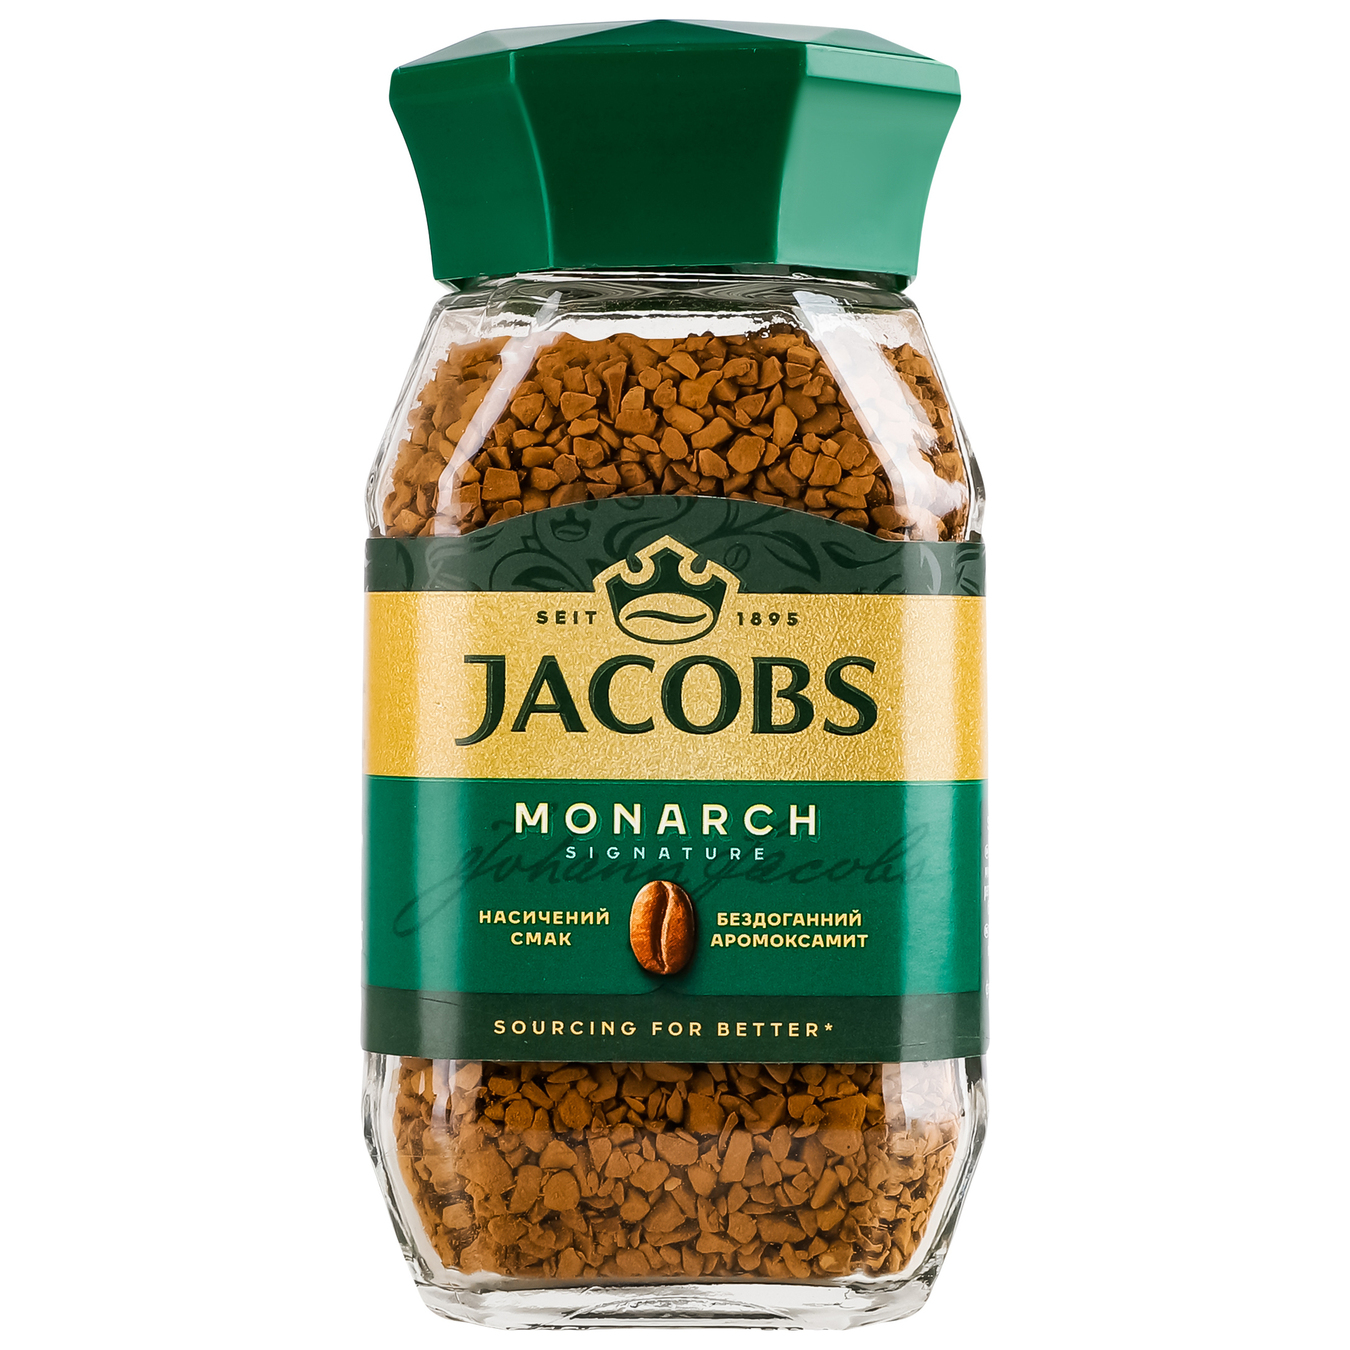 Кава Jacobs Monarch розчинна 48г